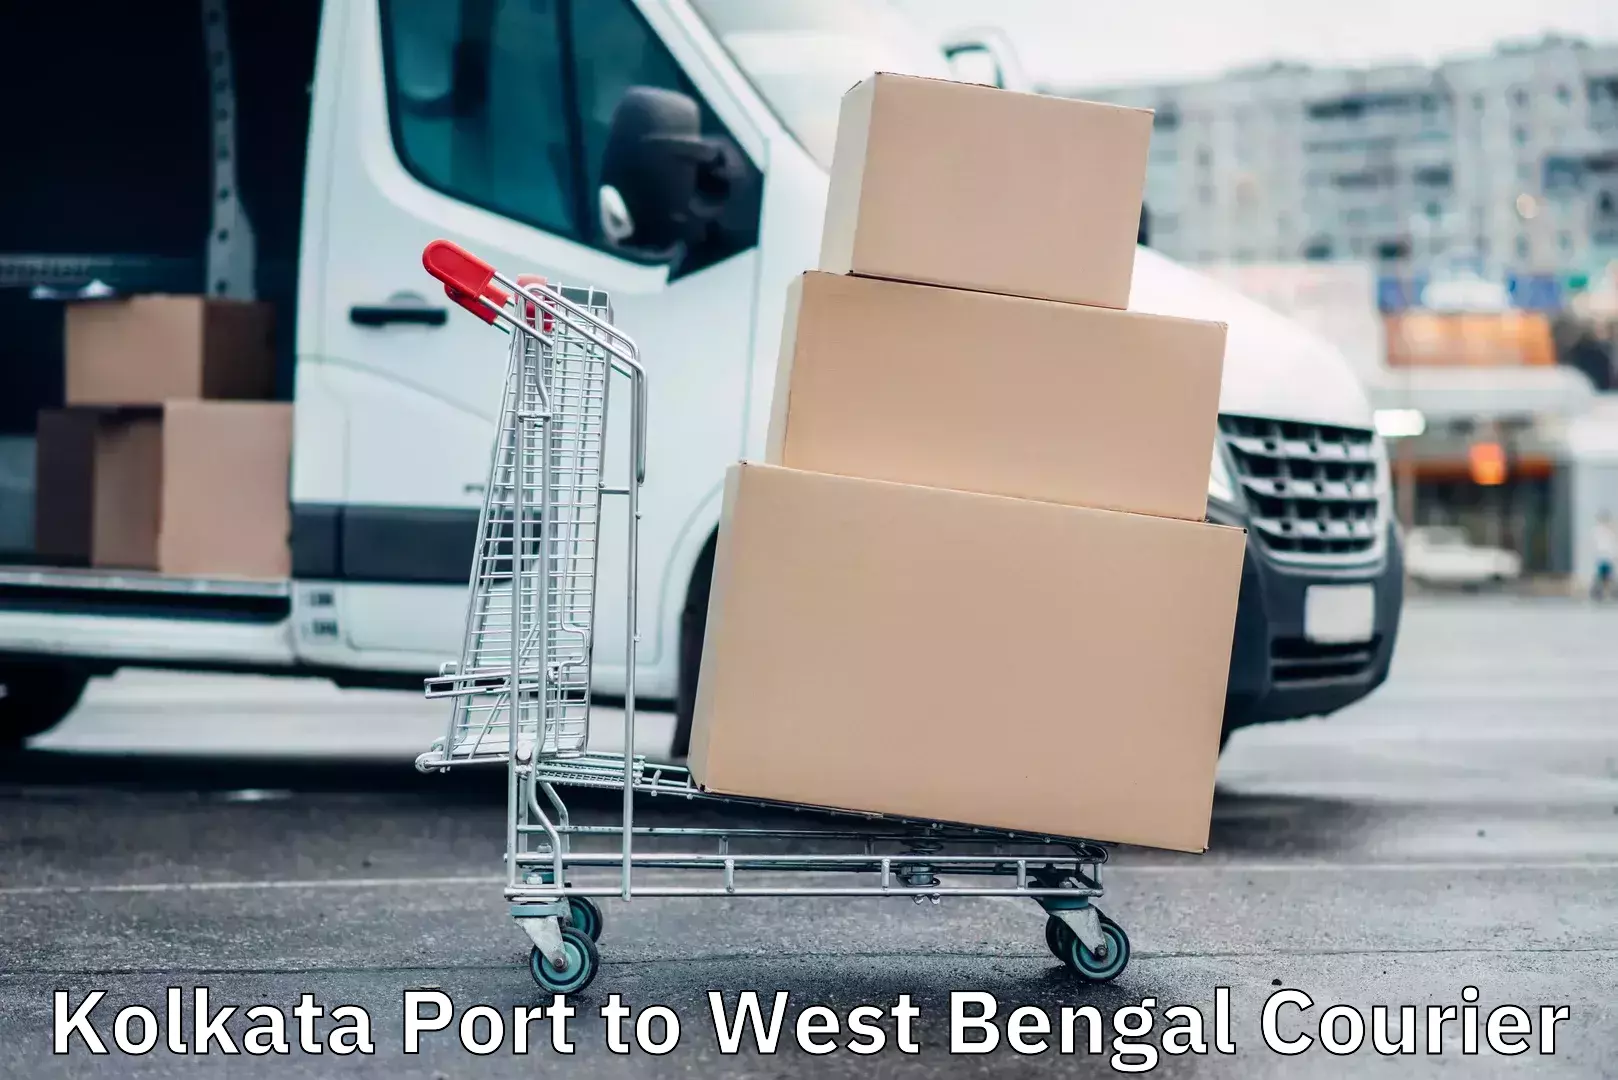 Express mail service Kolkata Port to West Bengal